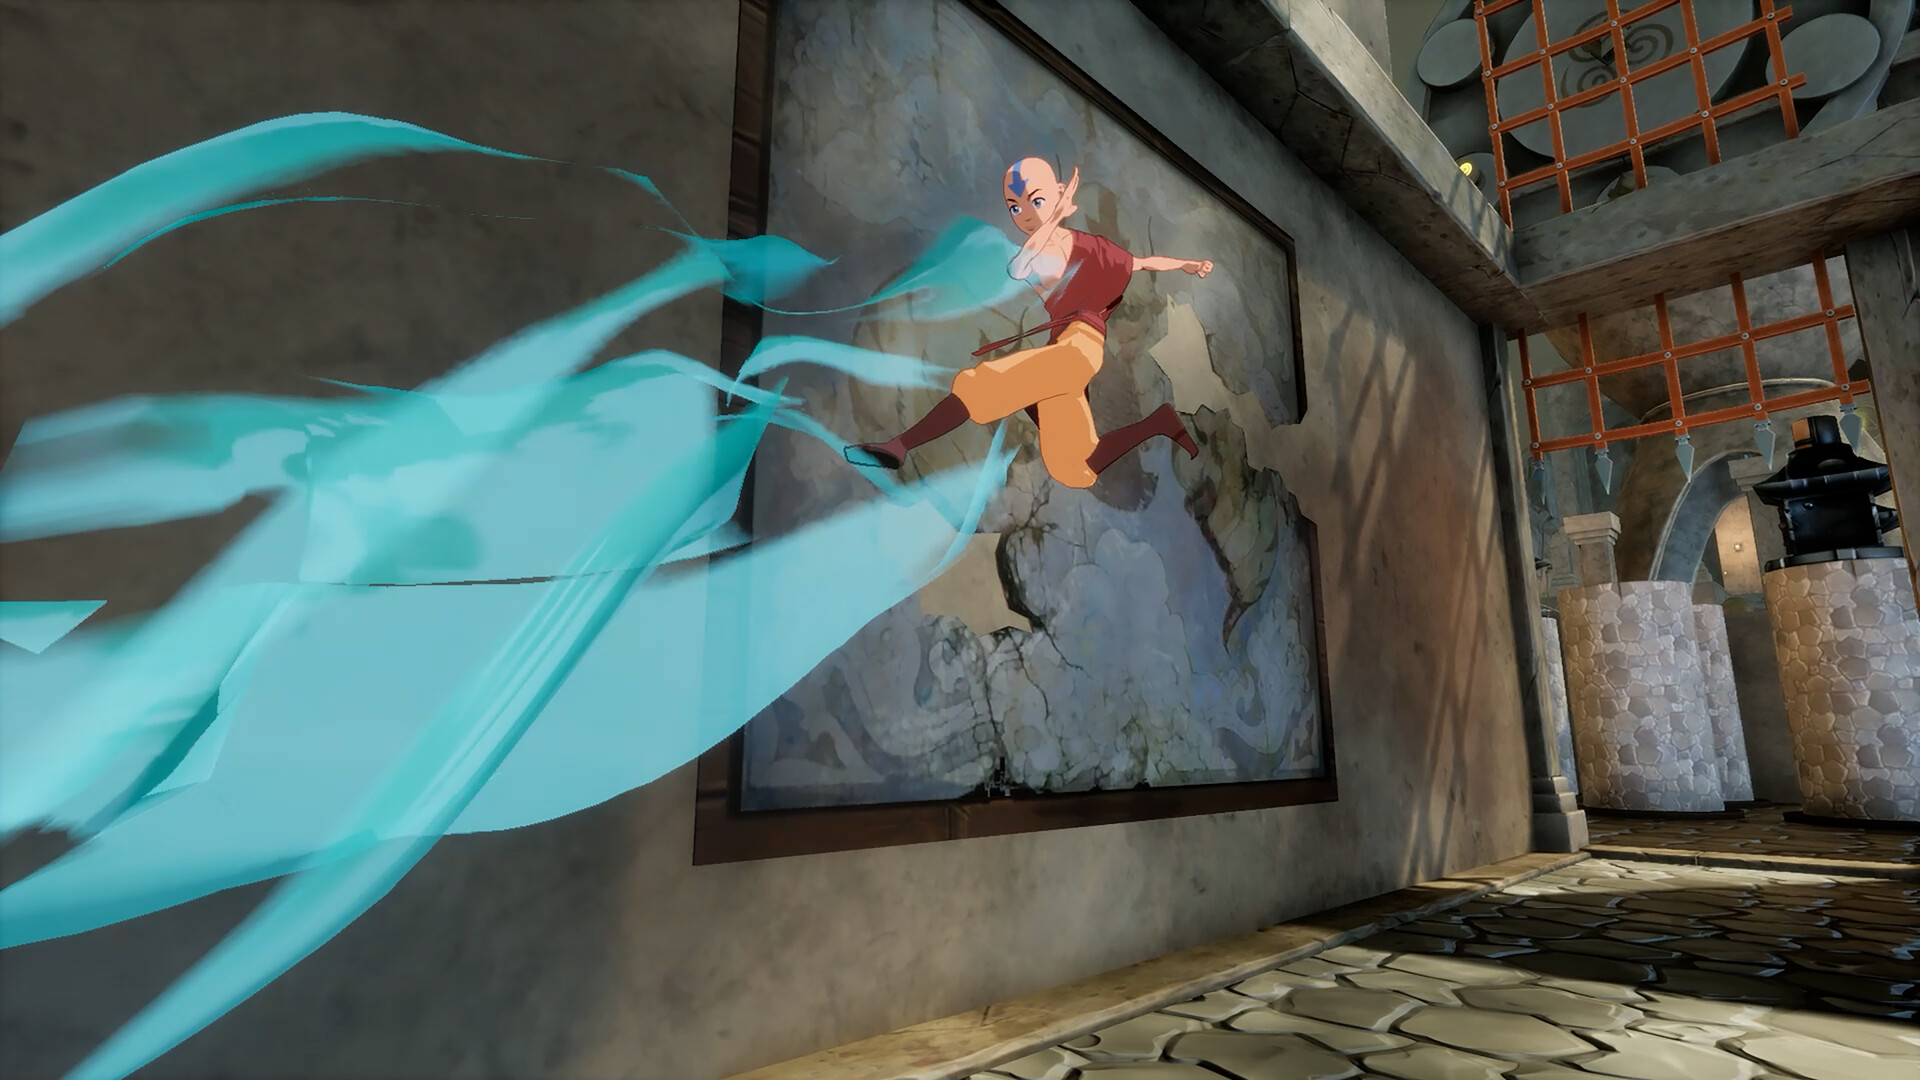 Avatar: The Last Airbender: Quest for Balance será lançado em 22